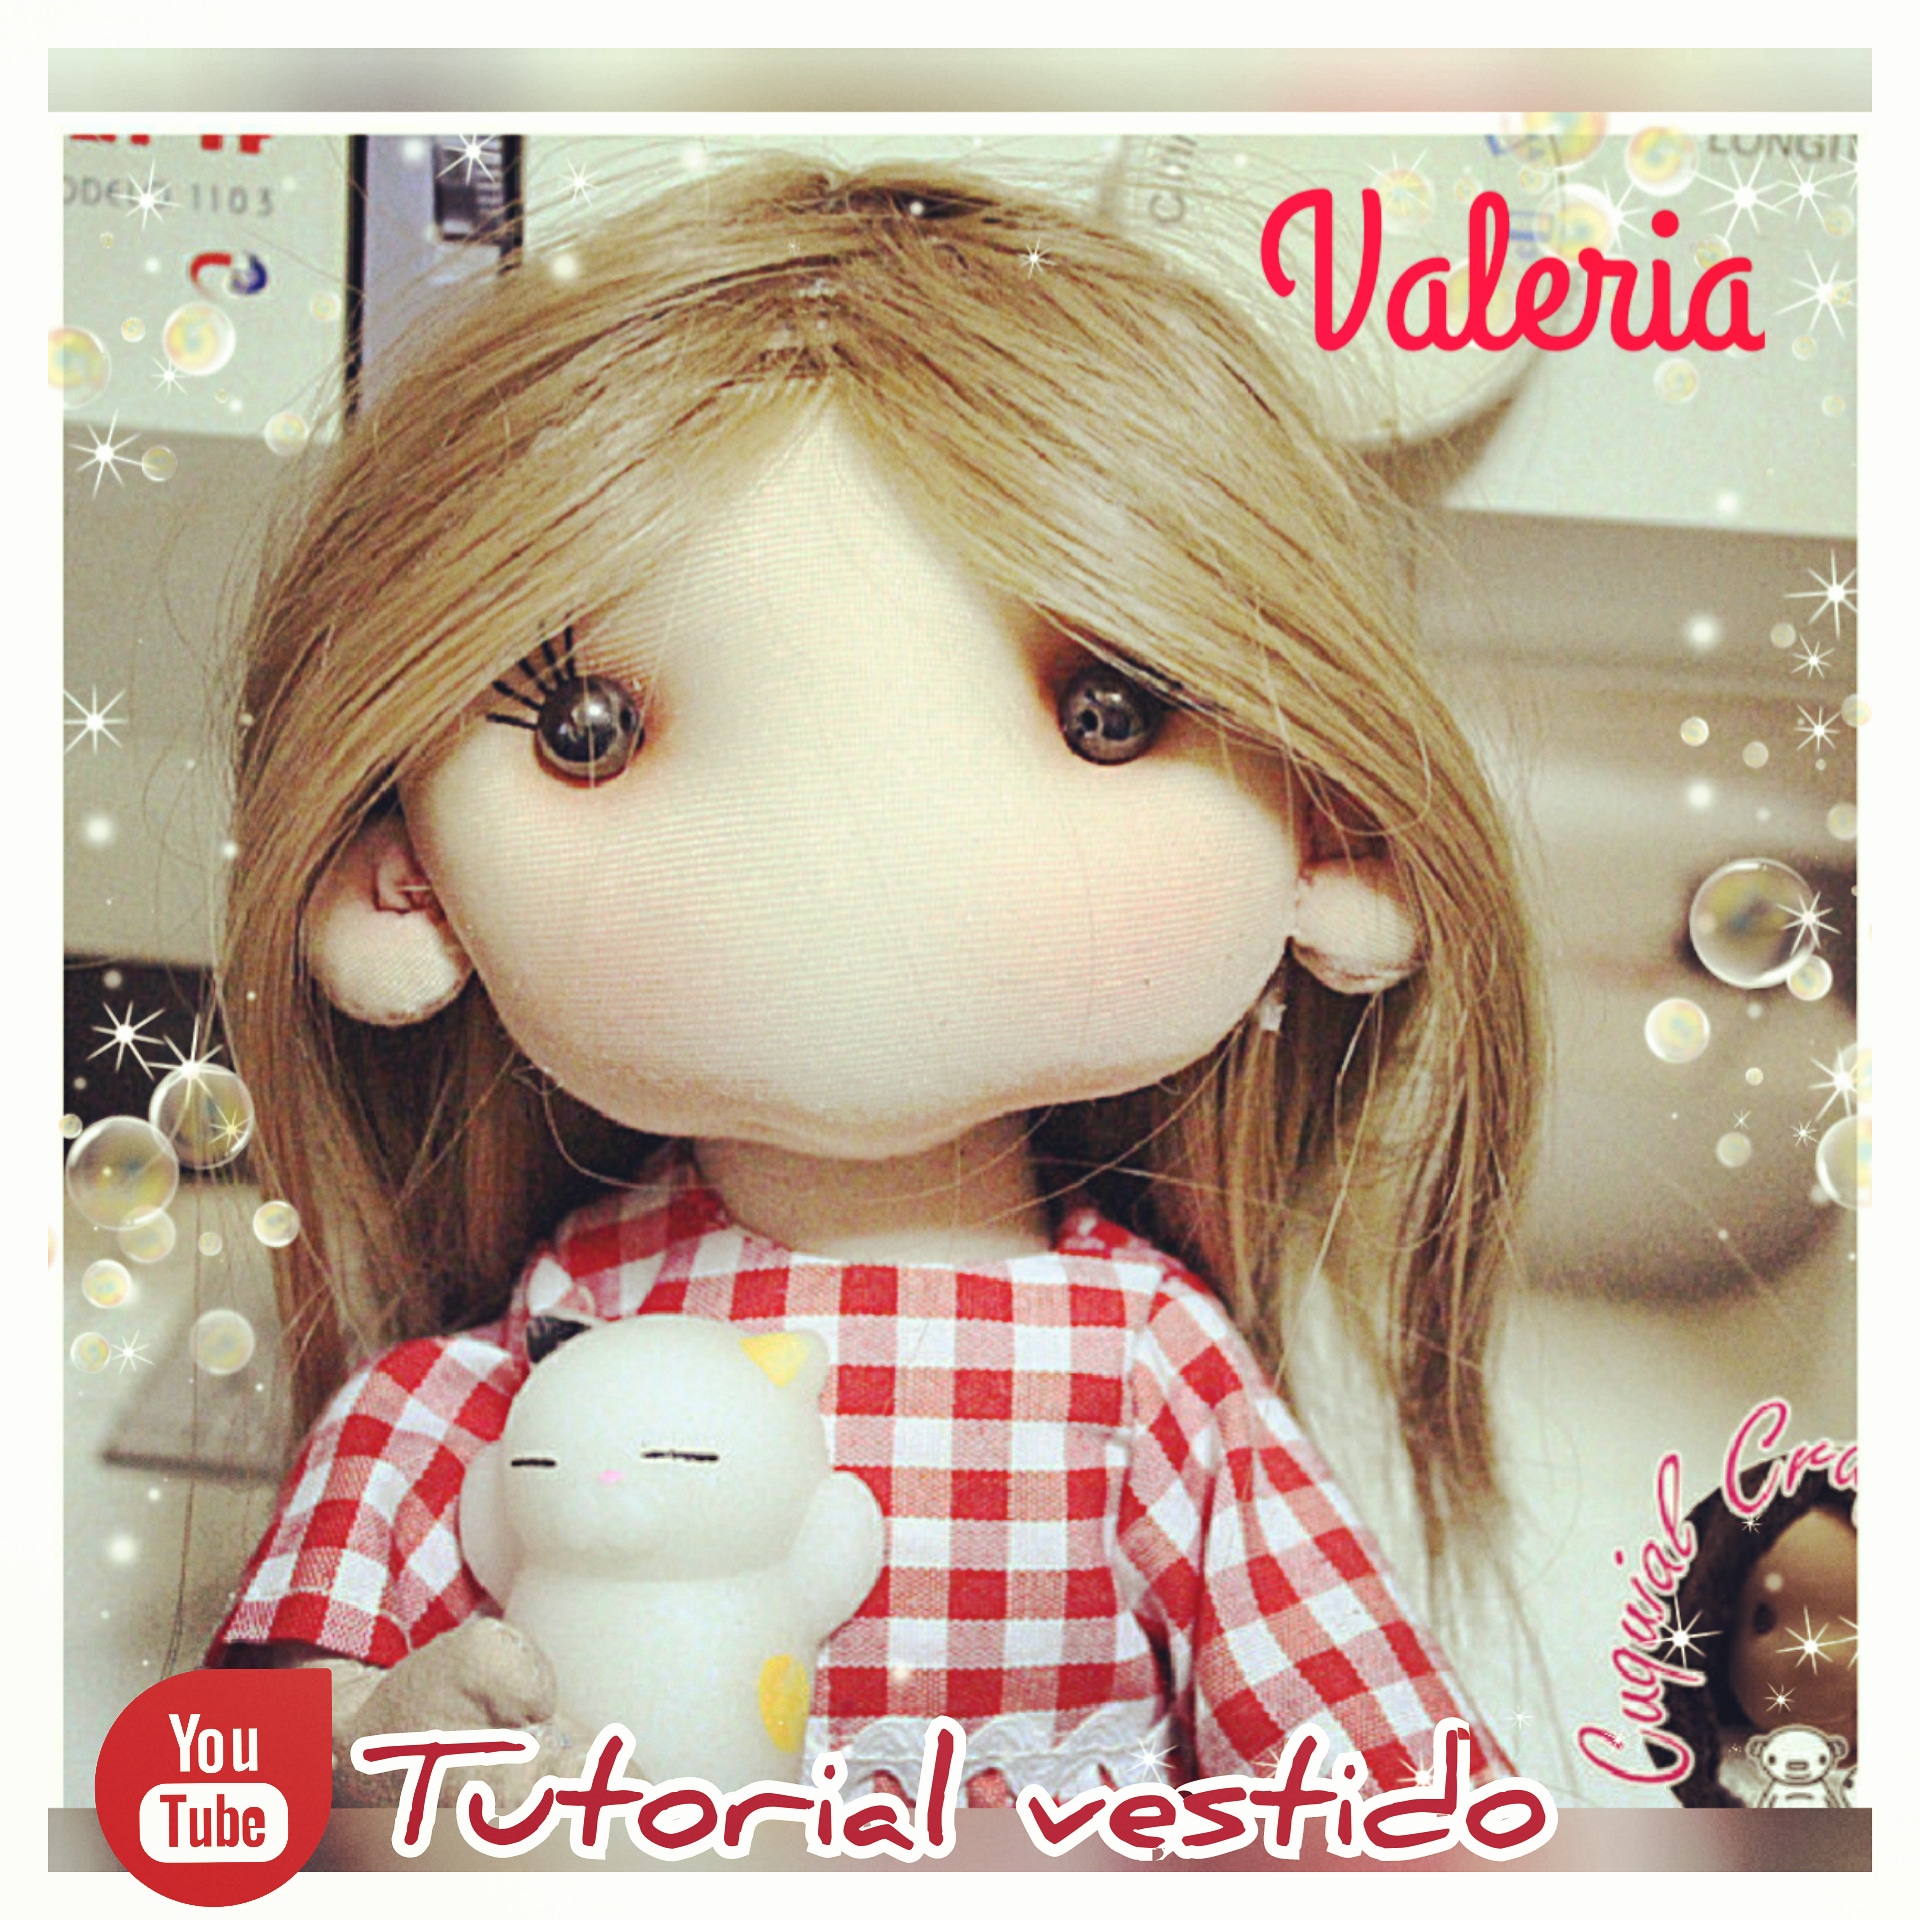 Valeria doll